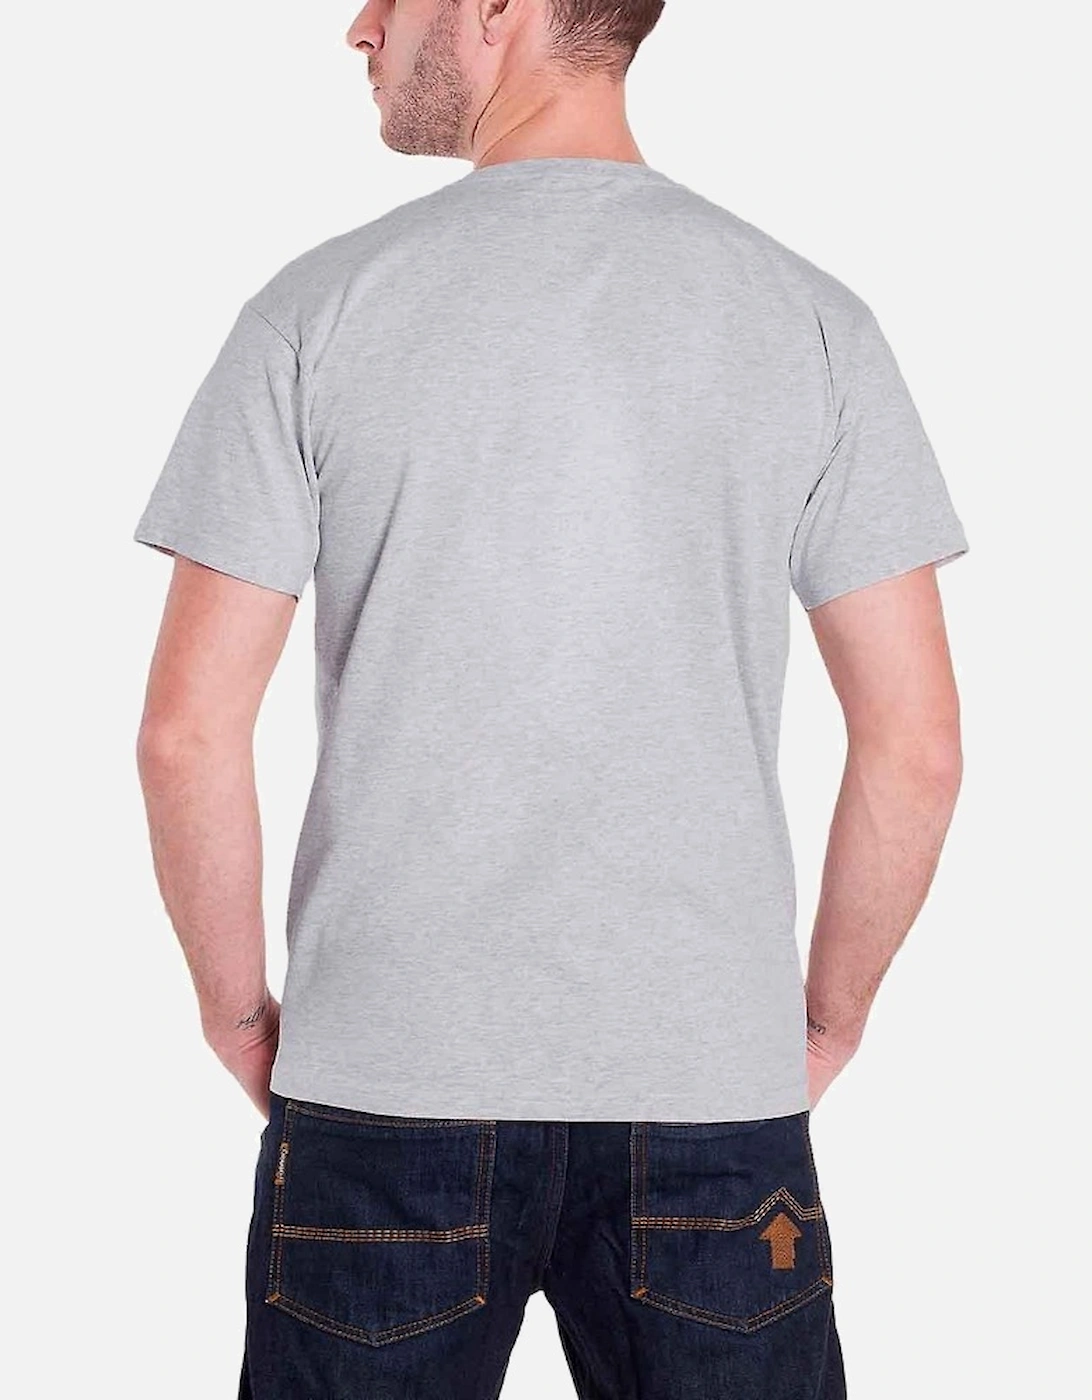 Unisex Adult Apple Logo T-Shirt